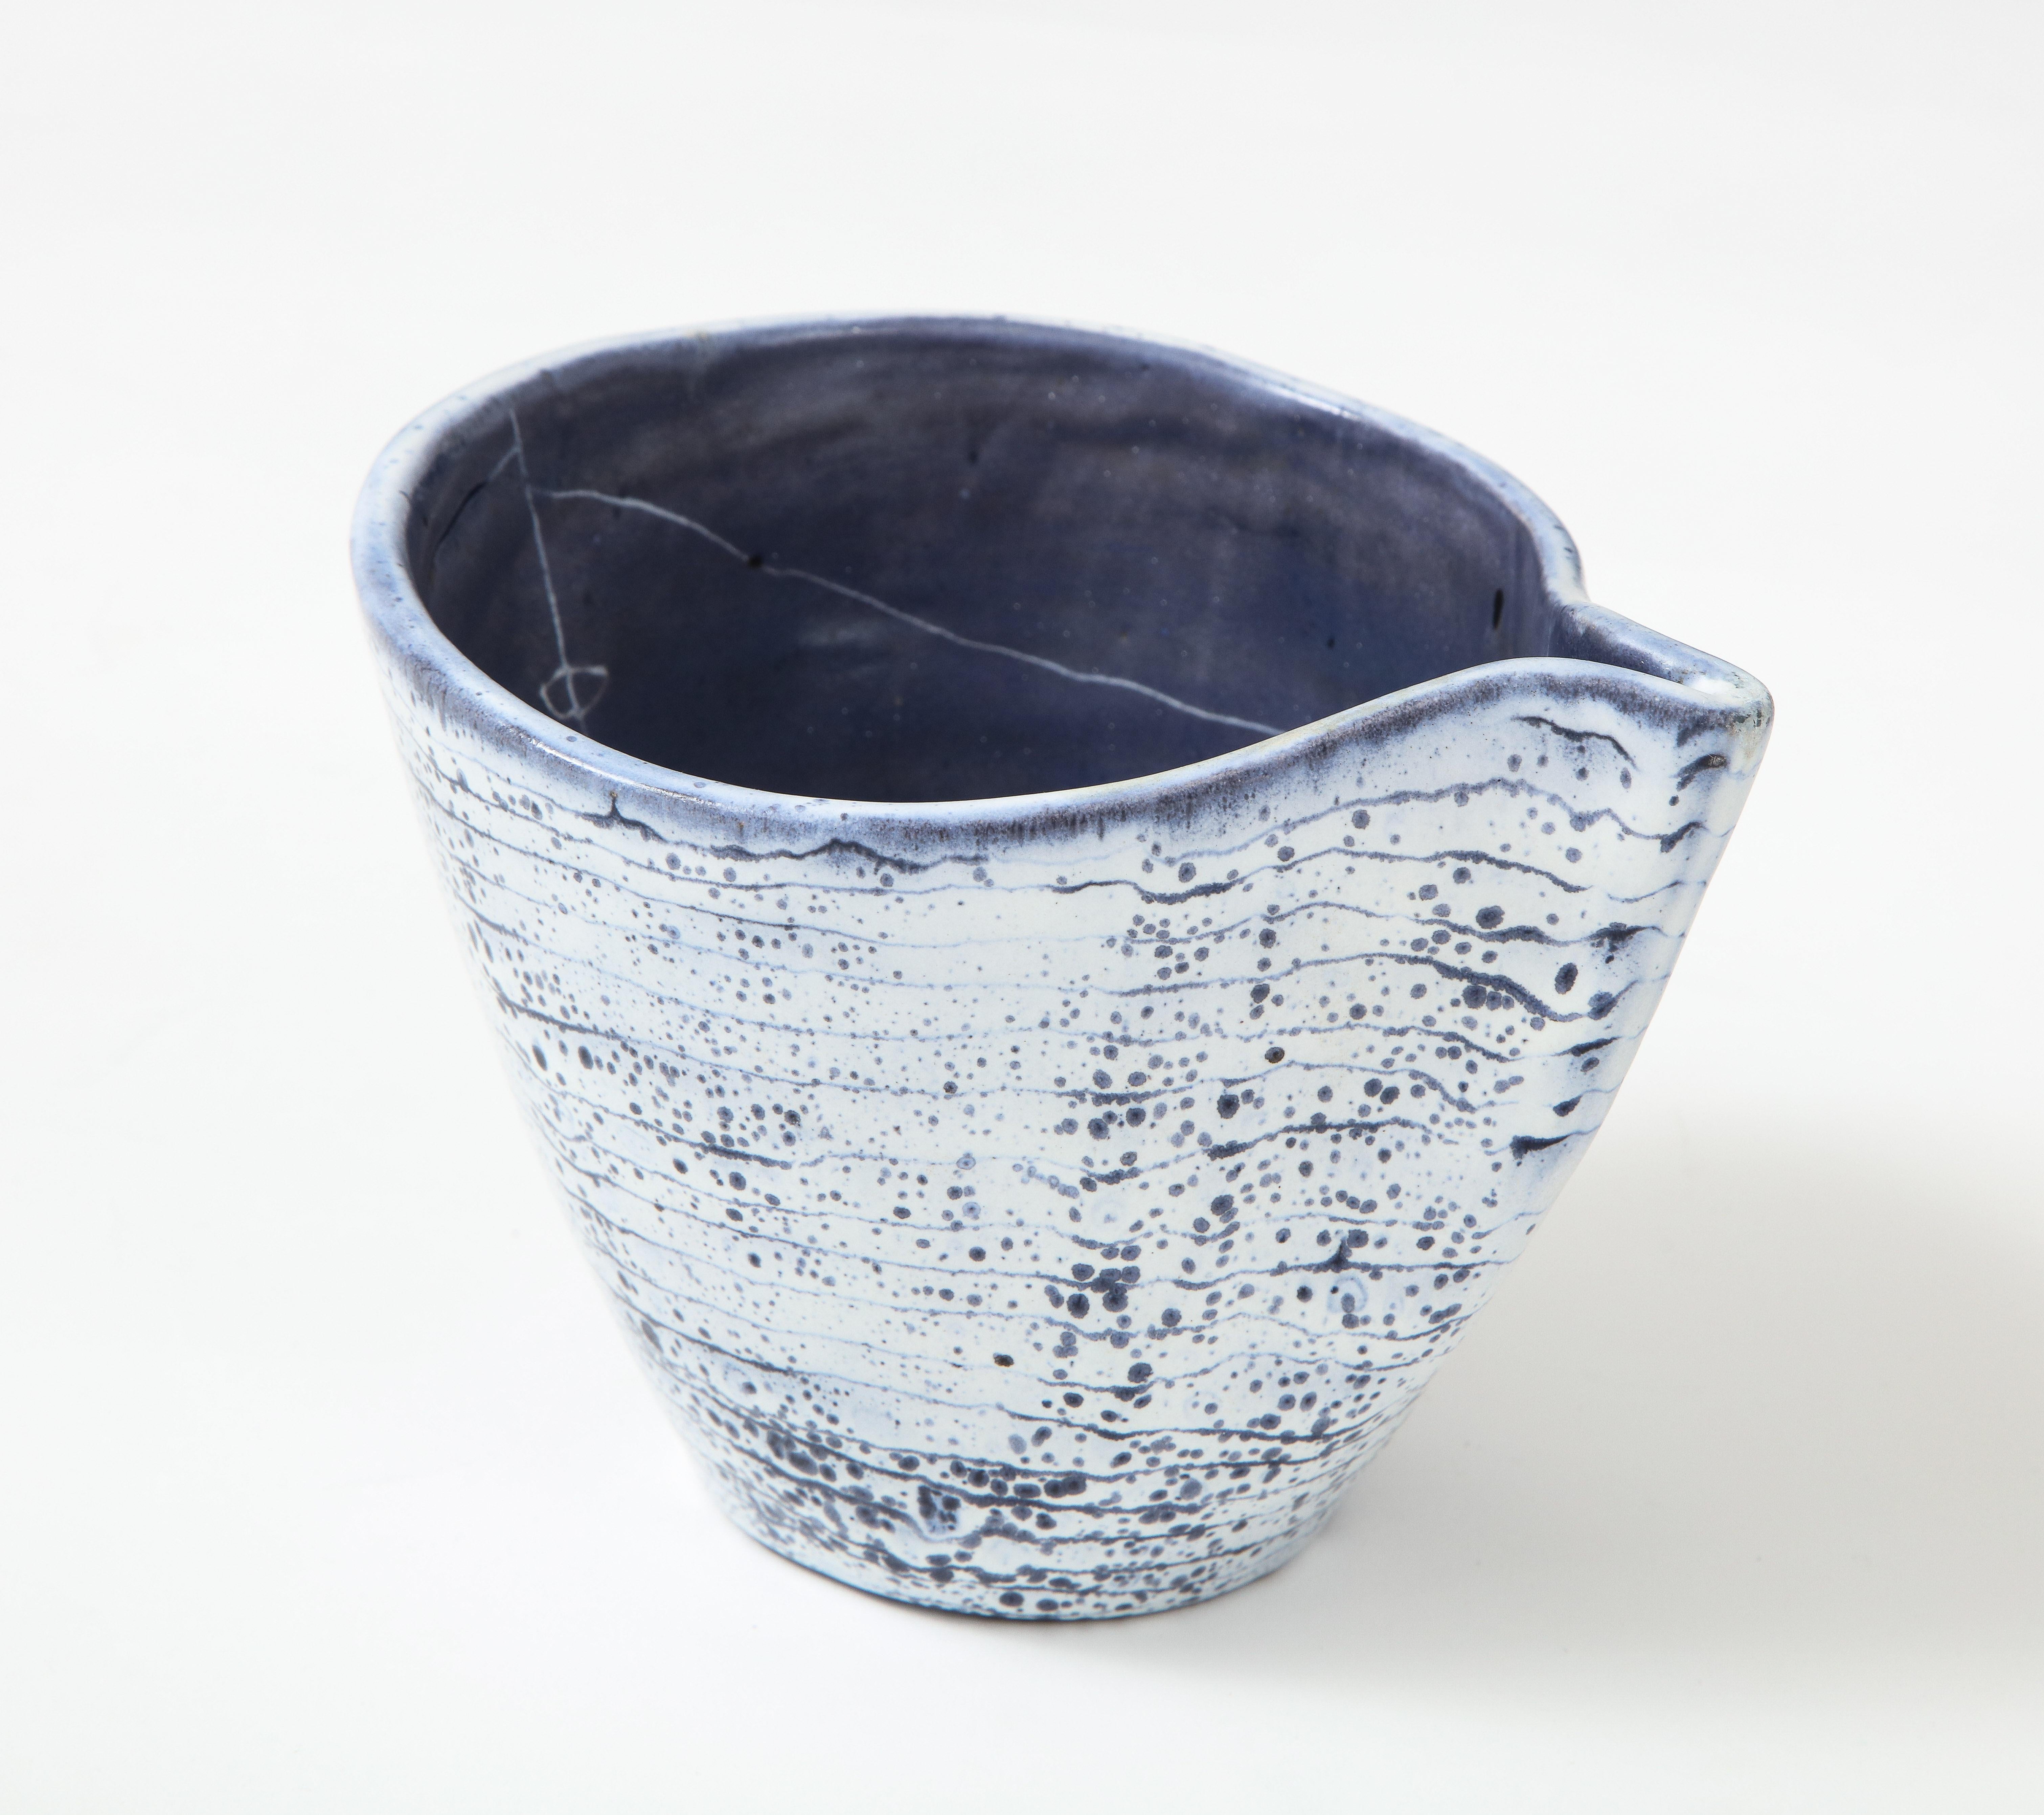 Blue and cream glazed ceramic bowl/vessel by Mado Jolain, France, c. 1955.

This elegant ceramic dish, executed in deep blue and cream tones, displays the signature 